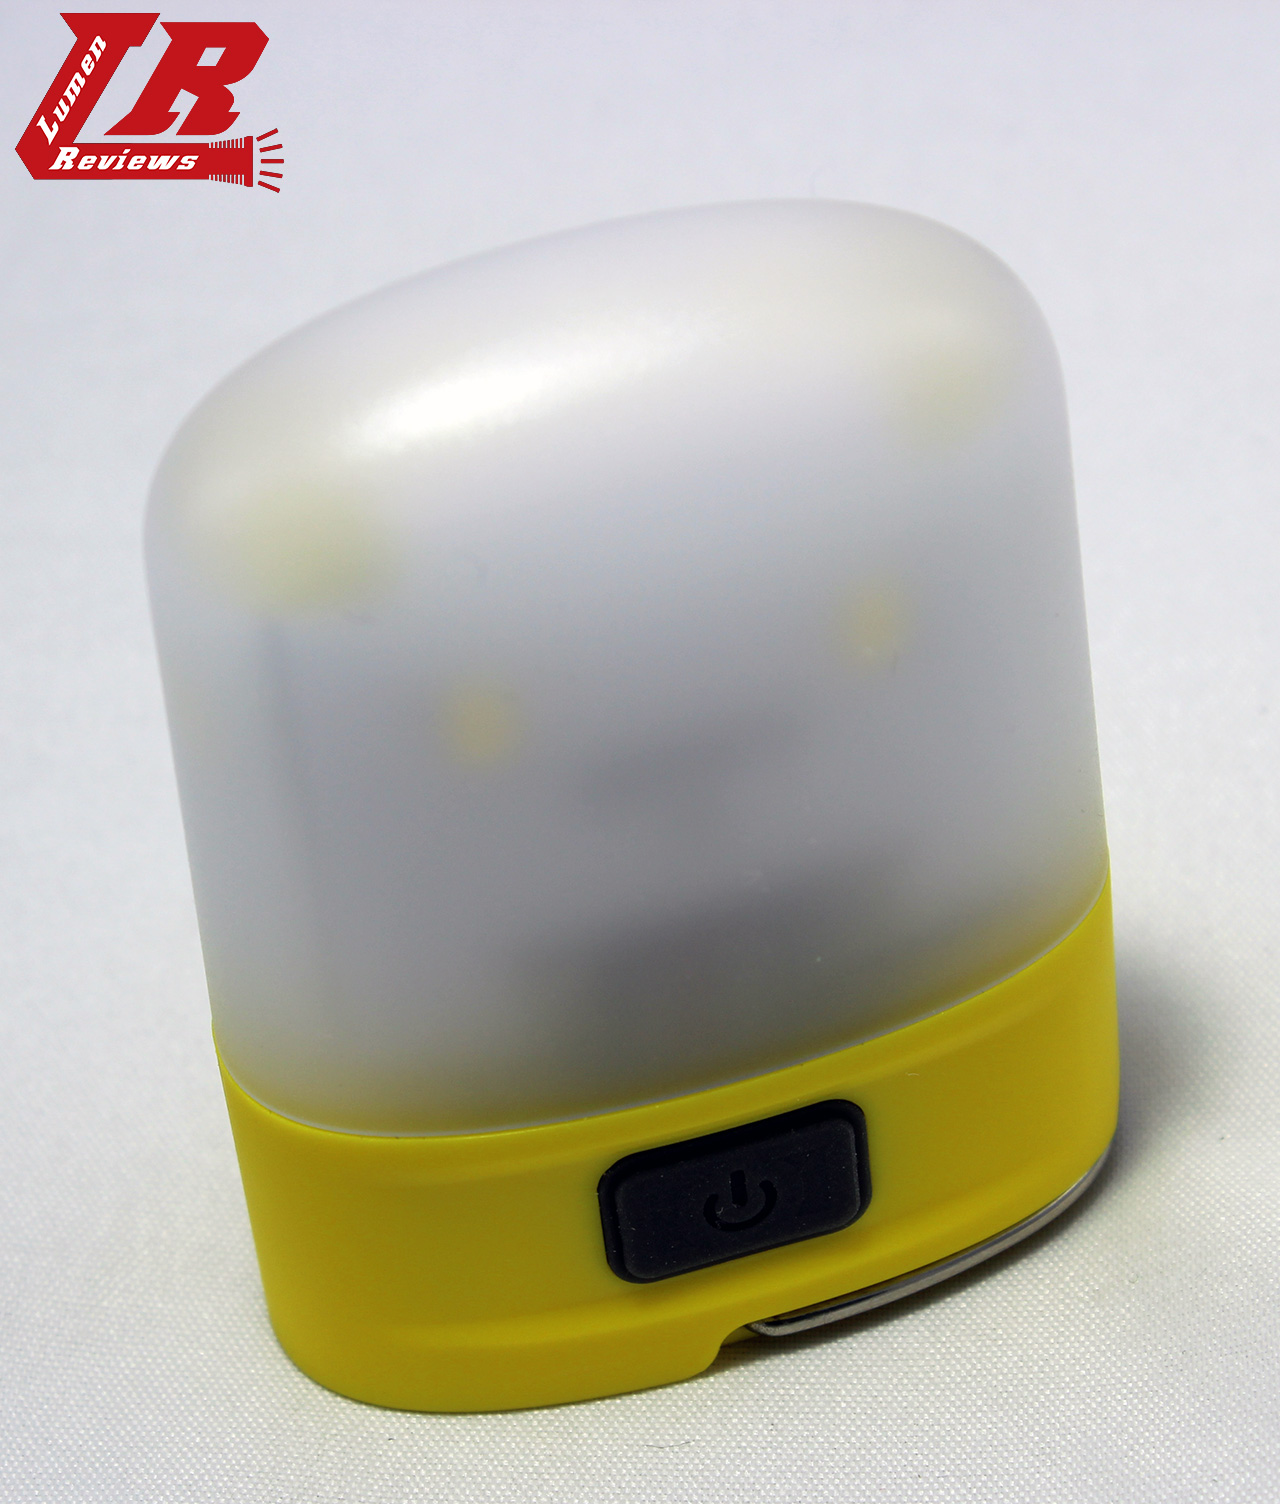 NITECORE LR10 Rechargeable Pocket Lantern